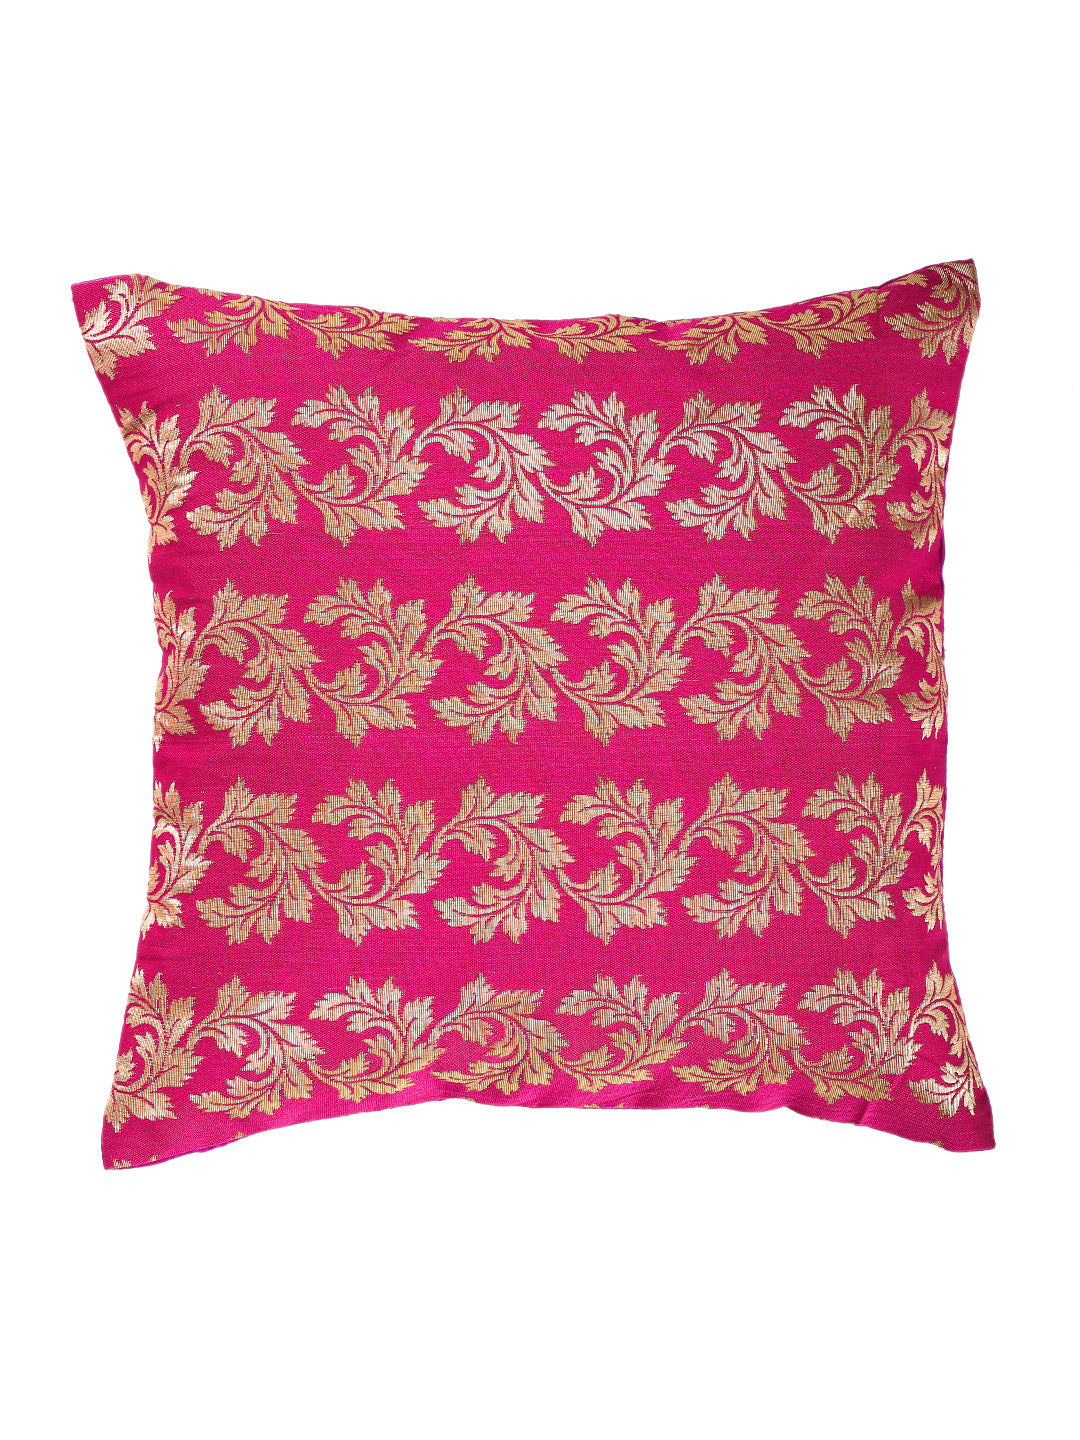 Silkfab Set 0f 5 Decorative Silk Cushion Covers (16x16) Floral Fuchsia - SILKFAB